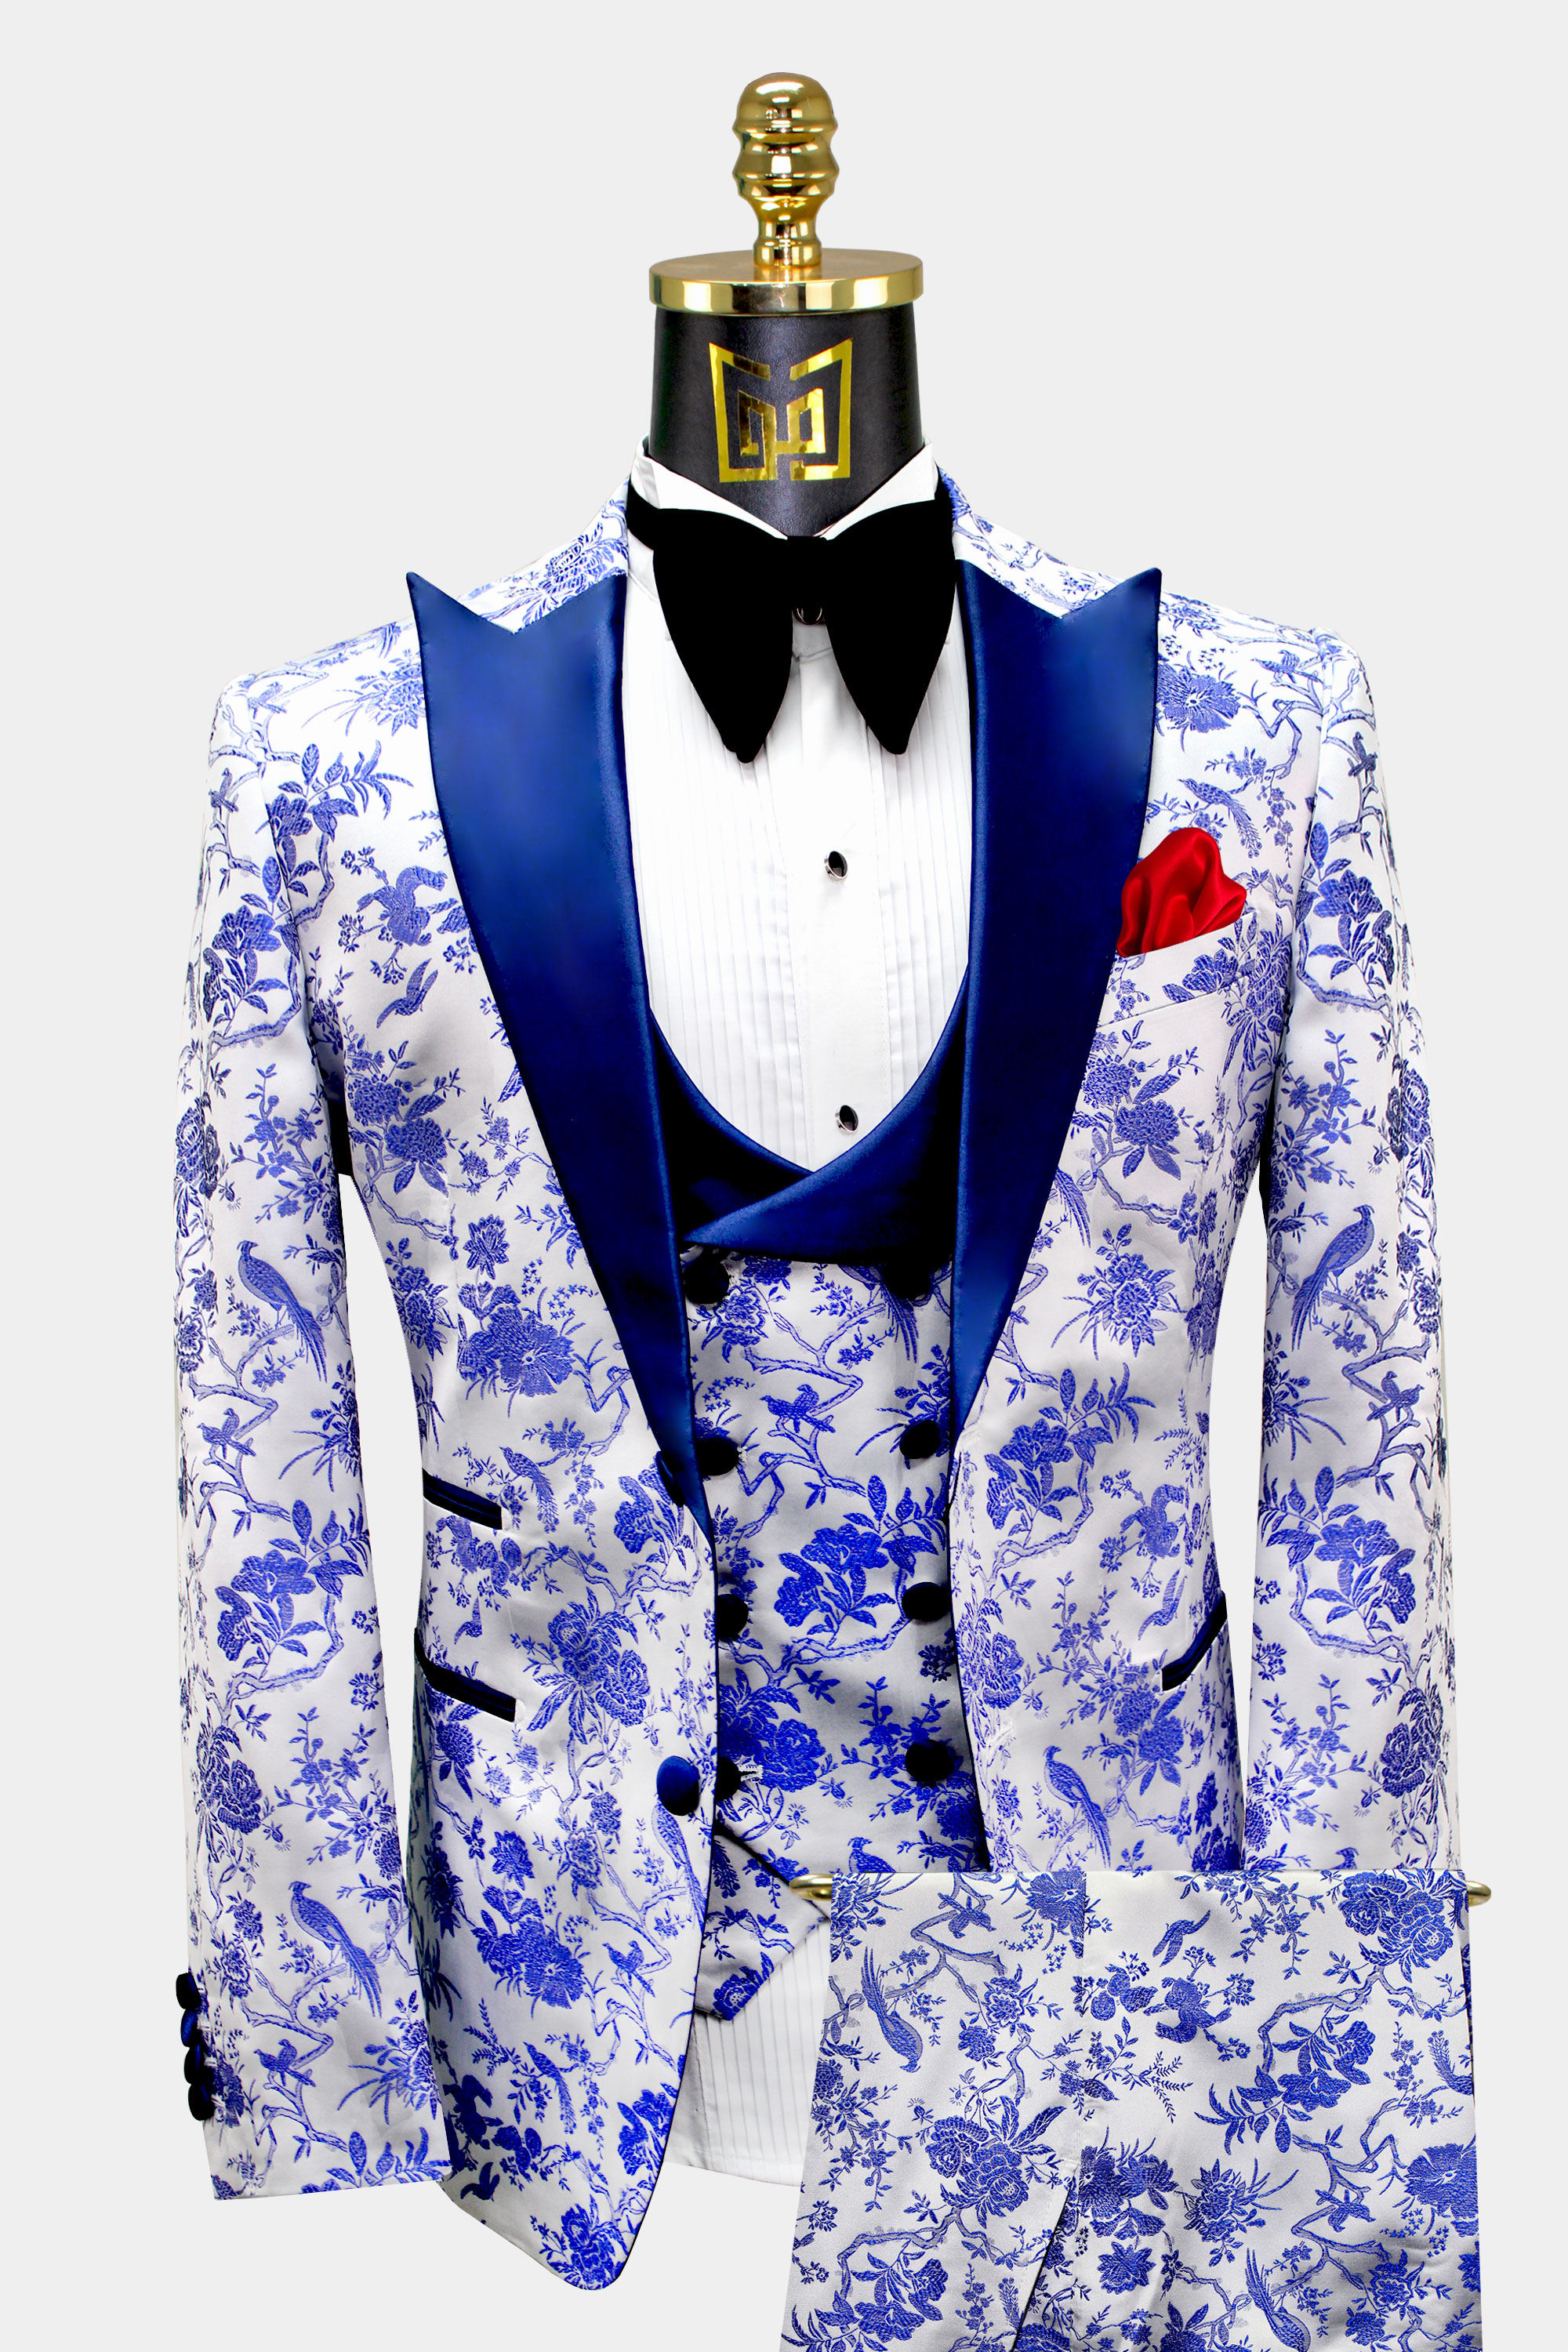 COOFANDY Men's Floral Tuxedo Jacket Rose Embroidered Suit Jacket ...